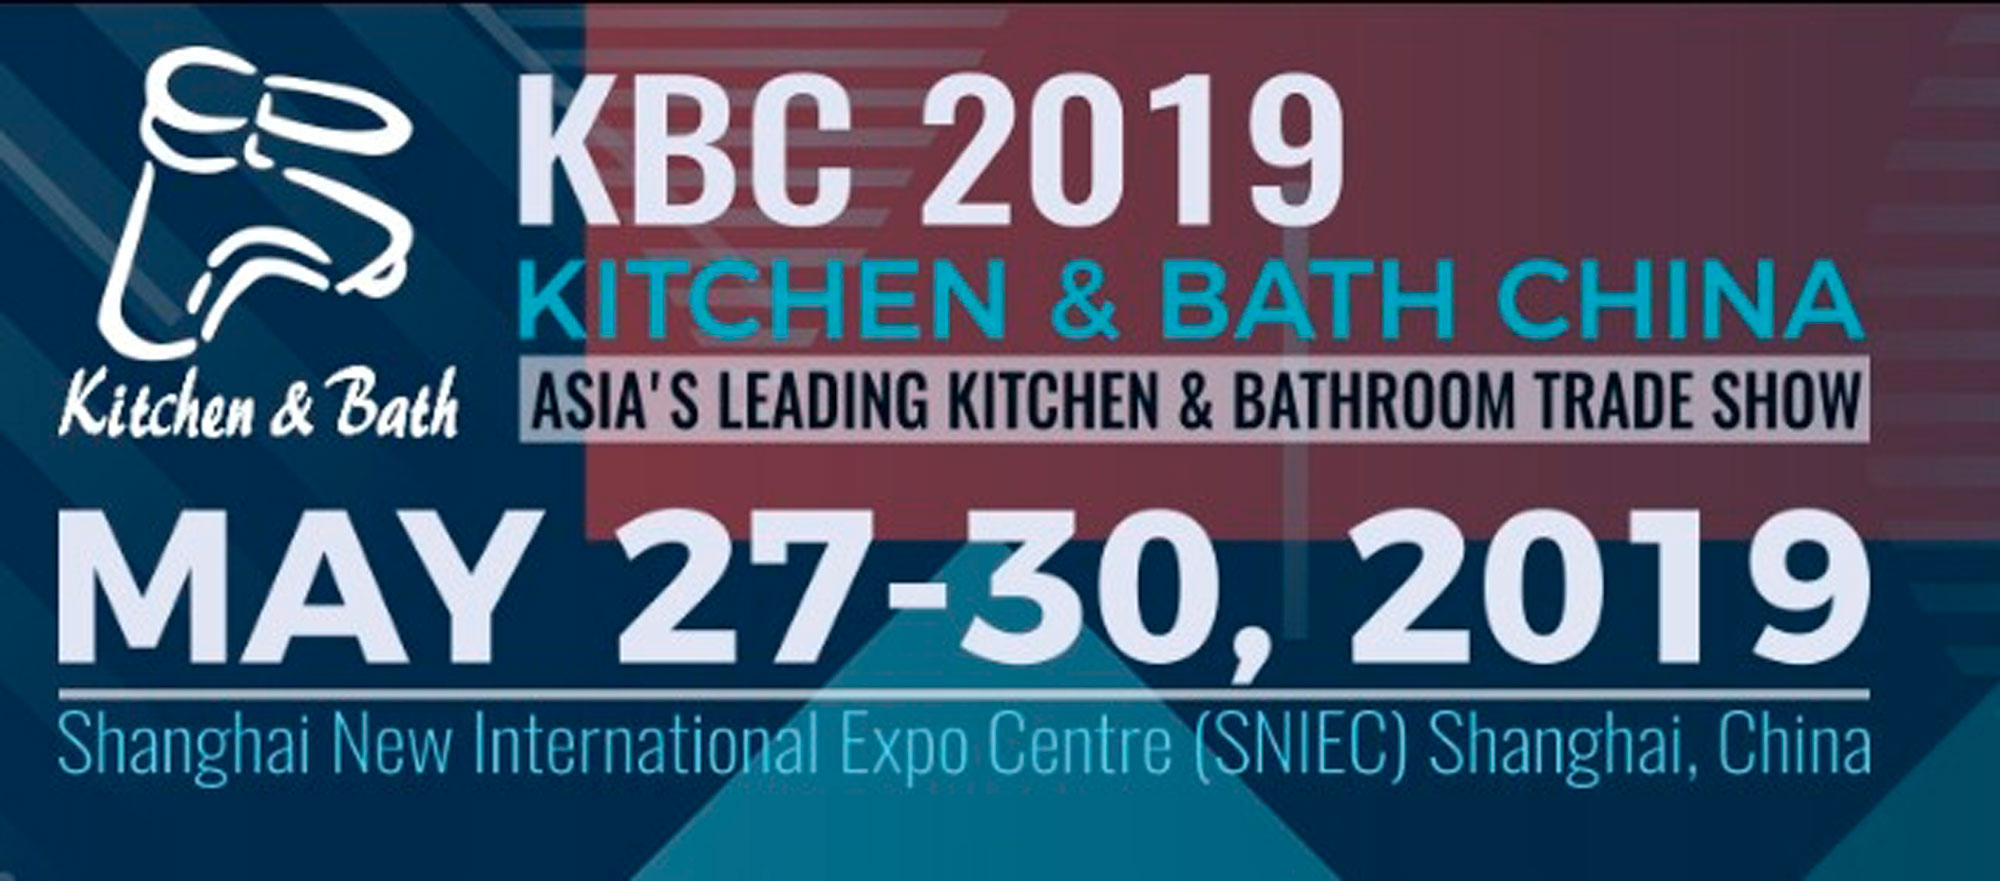 IDEAL Foshan to Exhibit at KBC (Kitchen & Bath China) Tradeshow, Shanghai 2019